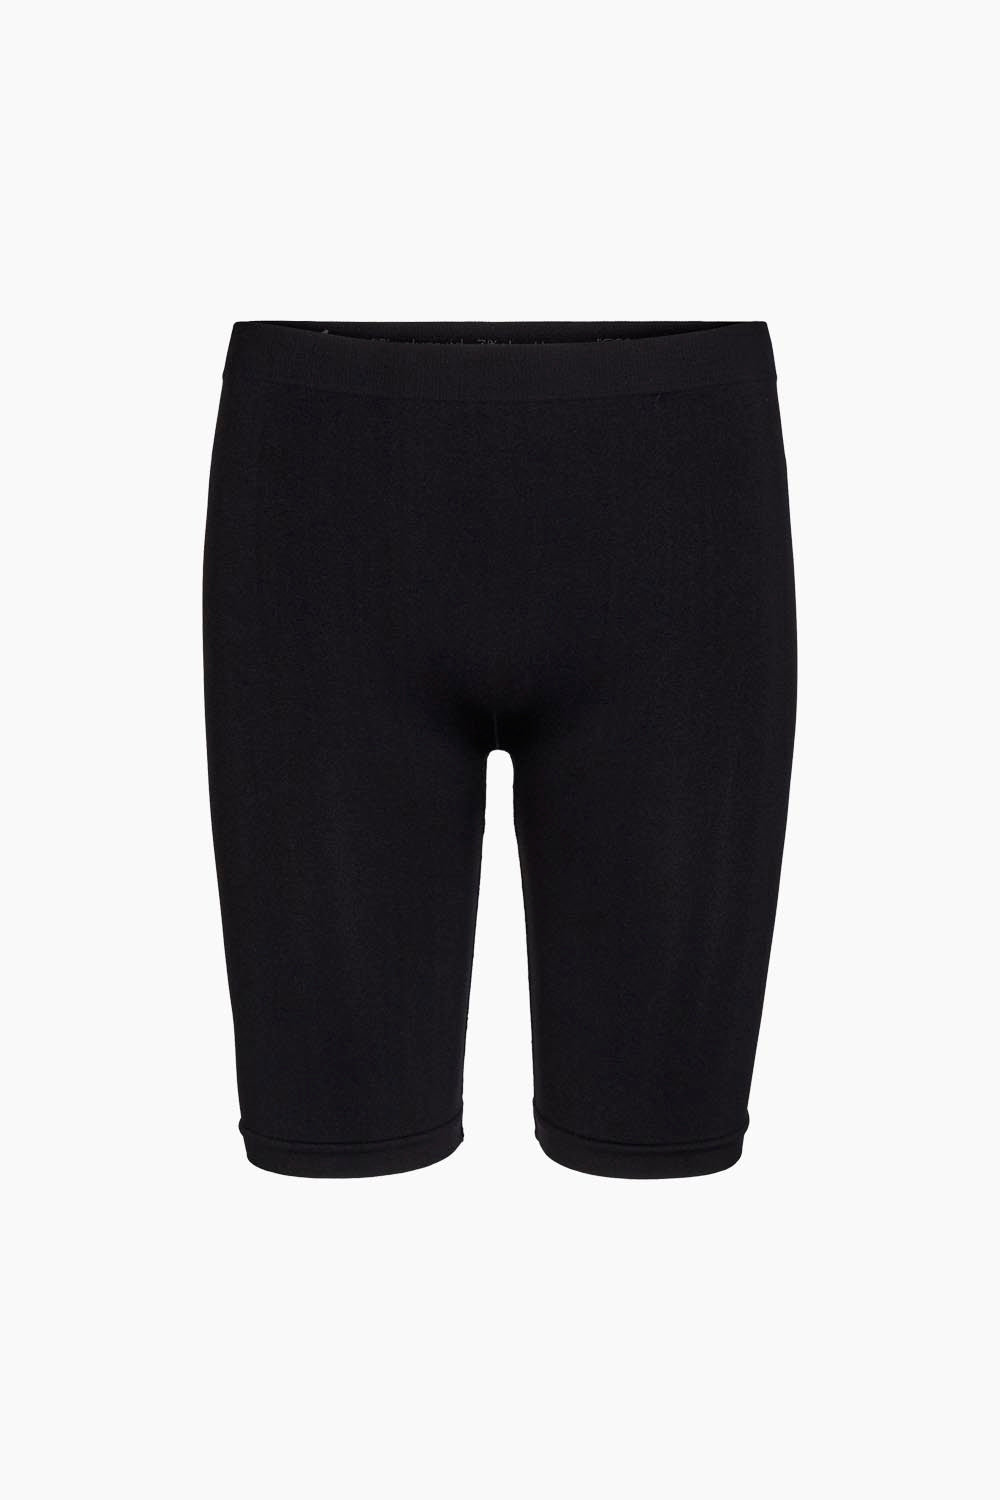 Ninna Shorts - Black - Liberté - BLACK L/XL